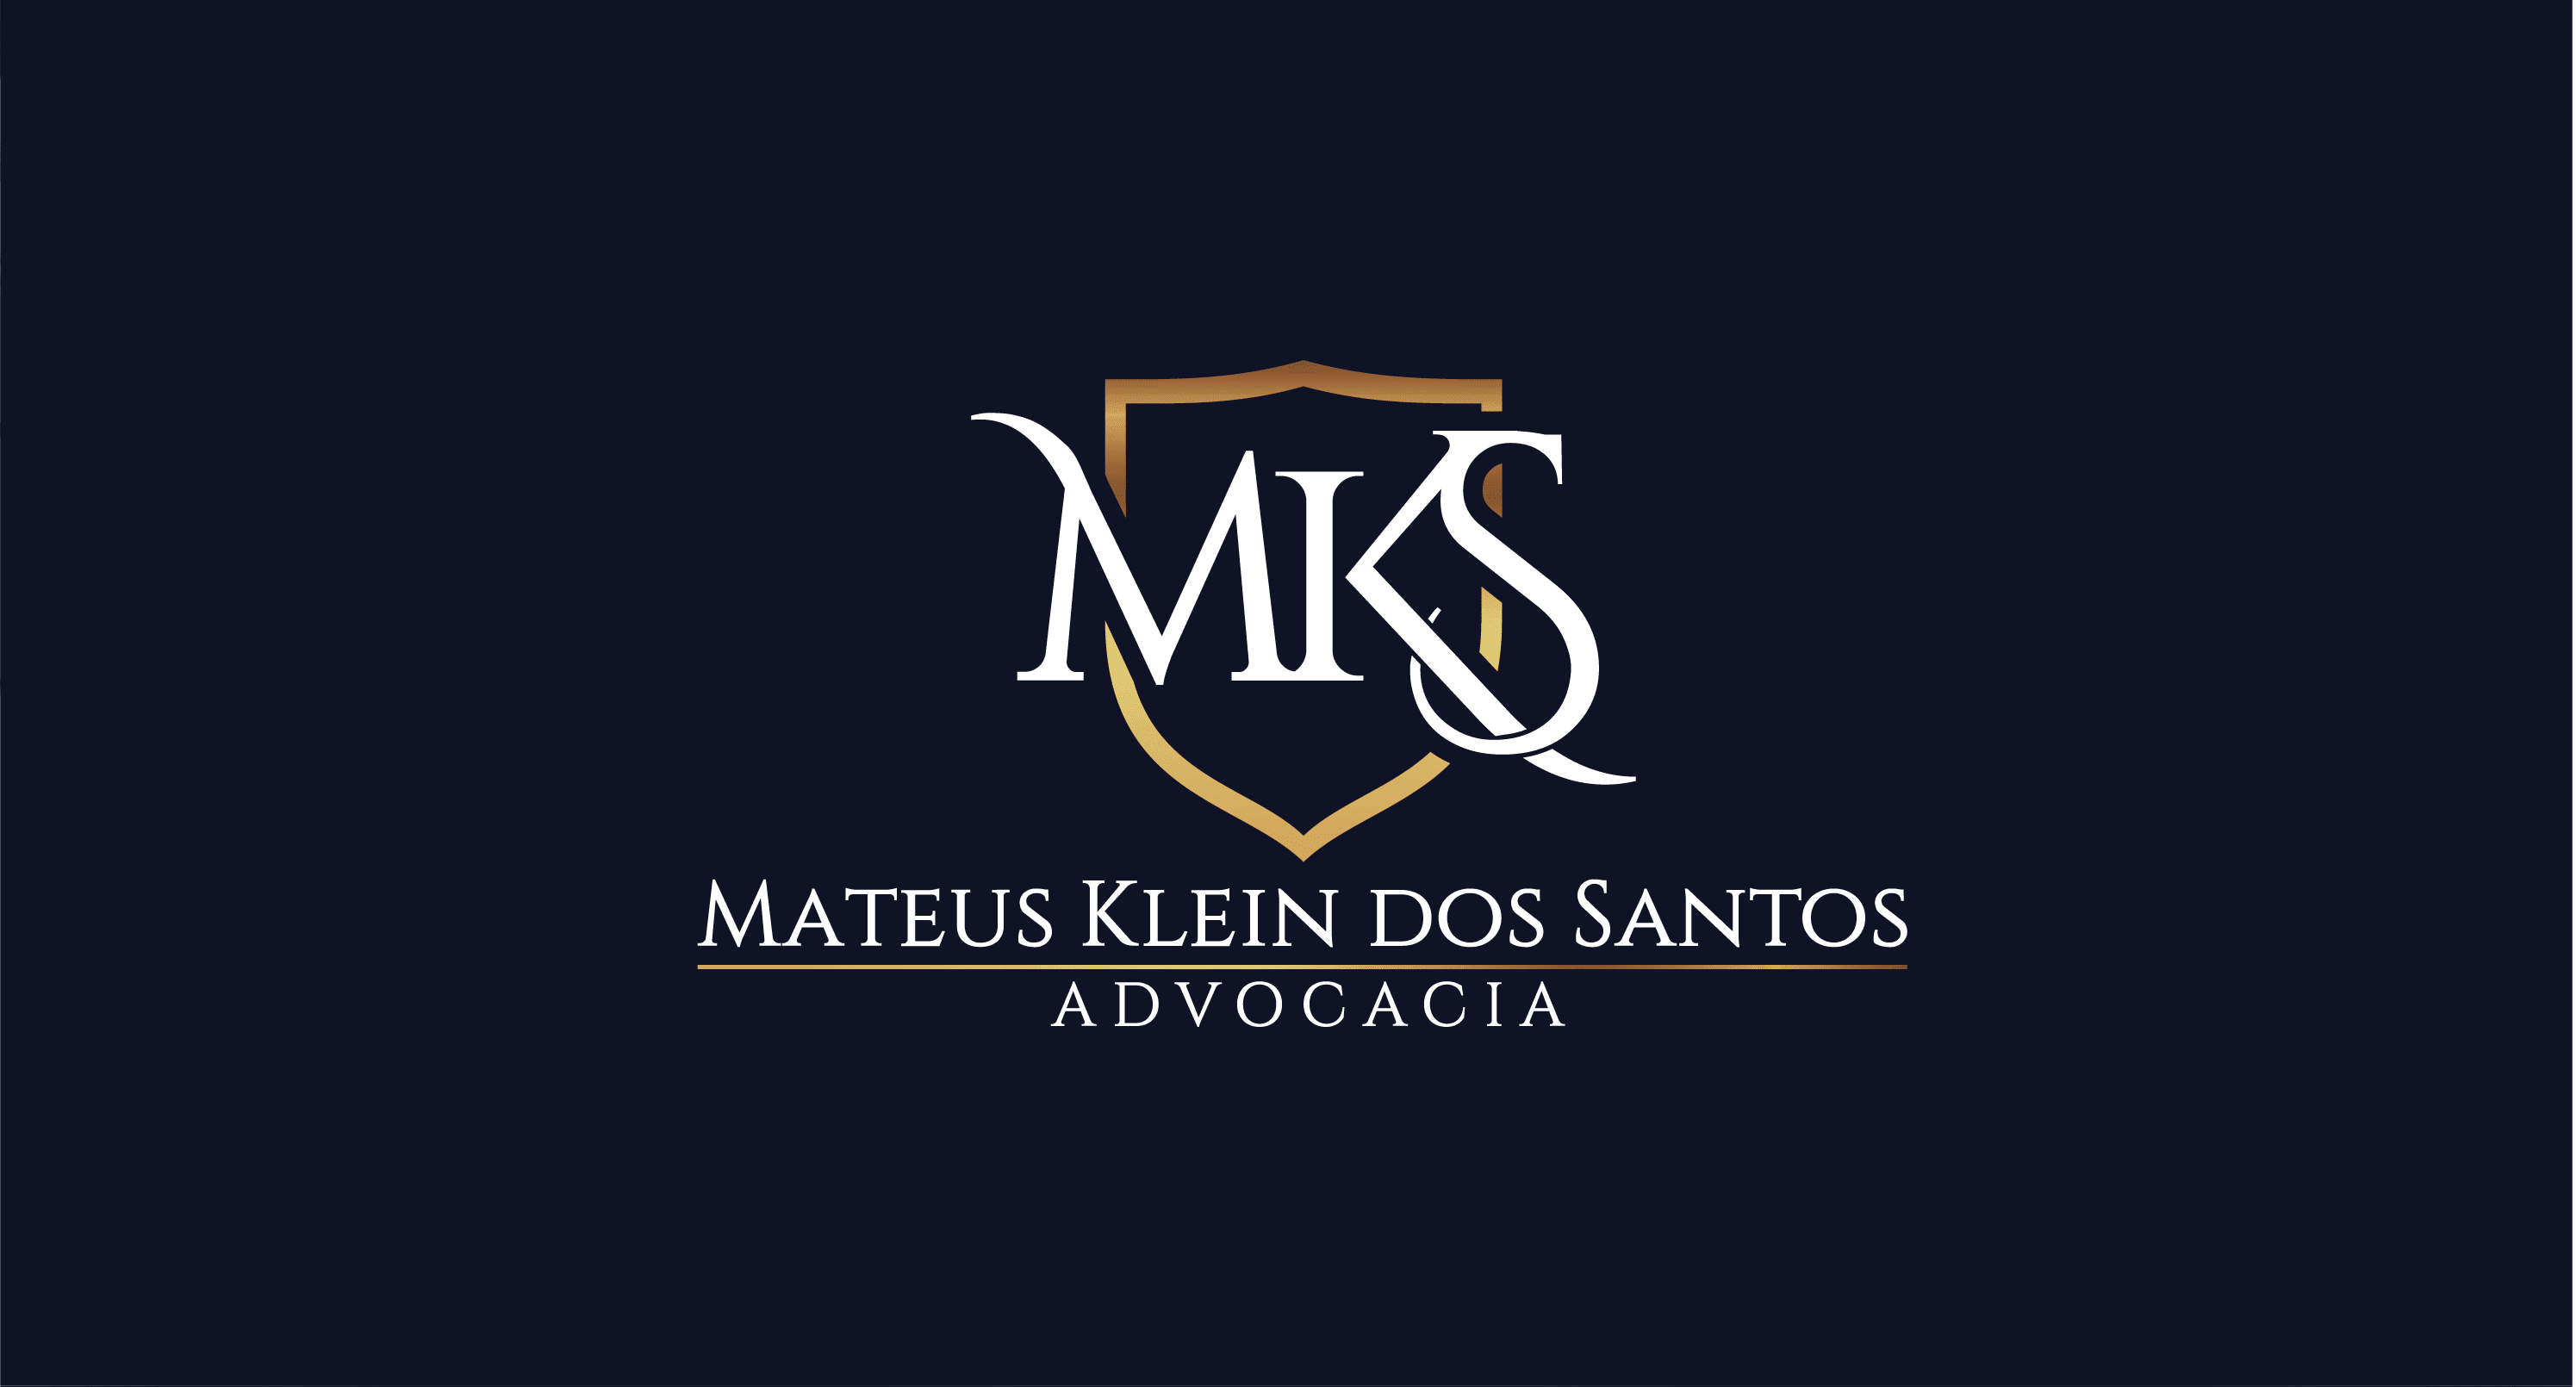 MKS Advocacia